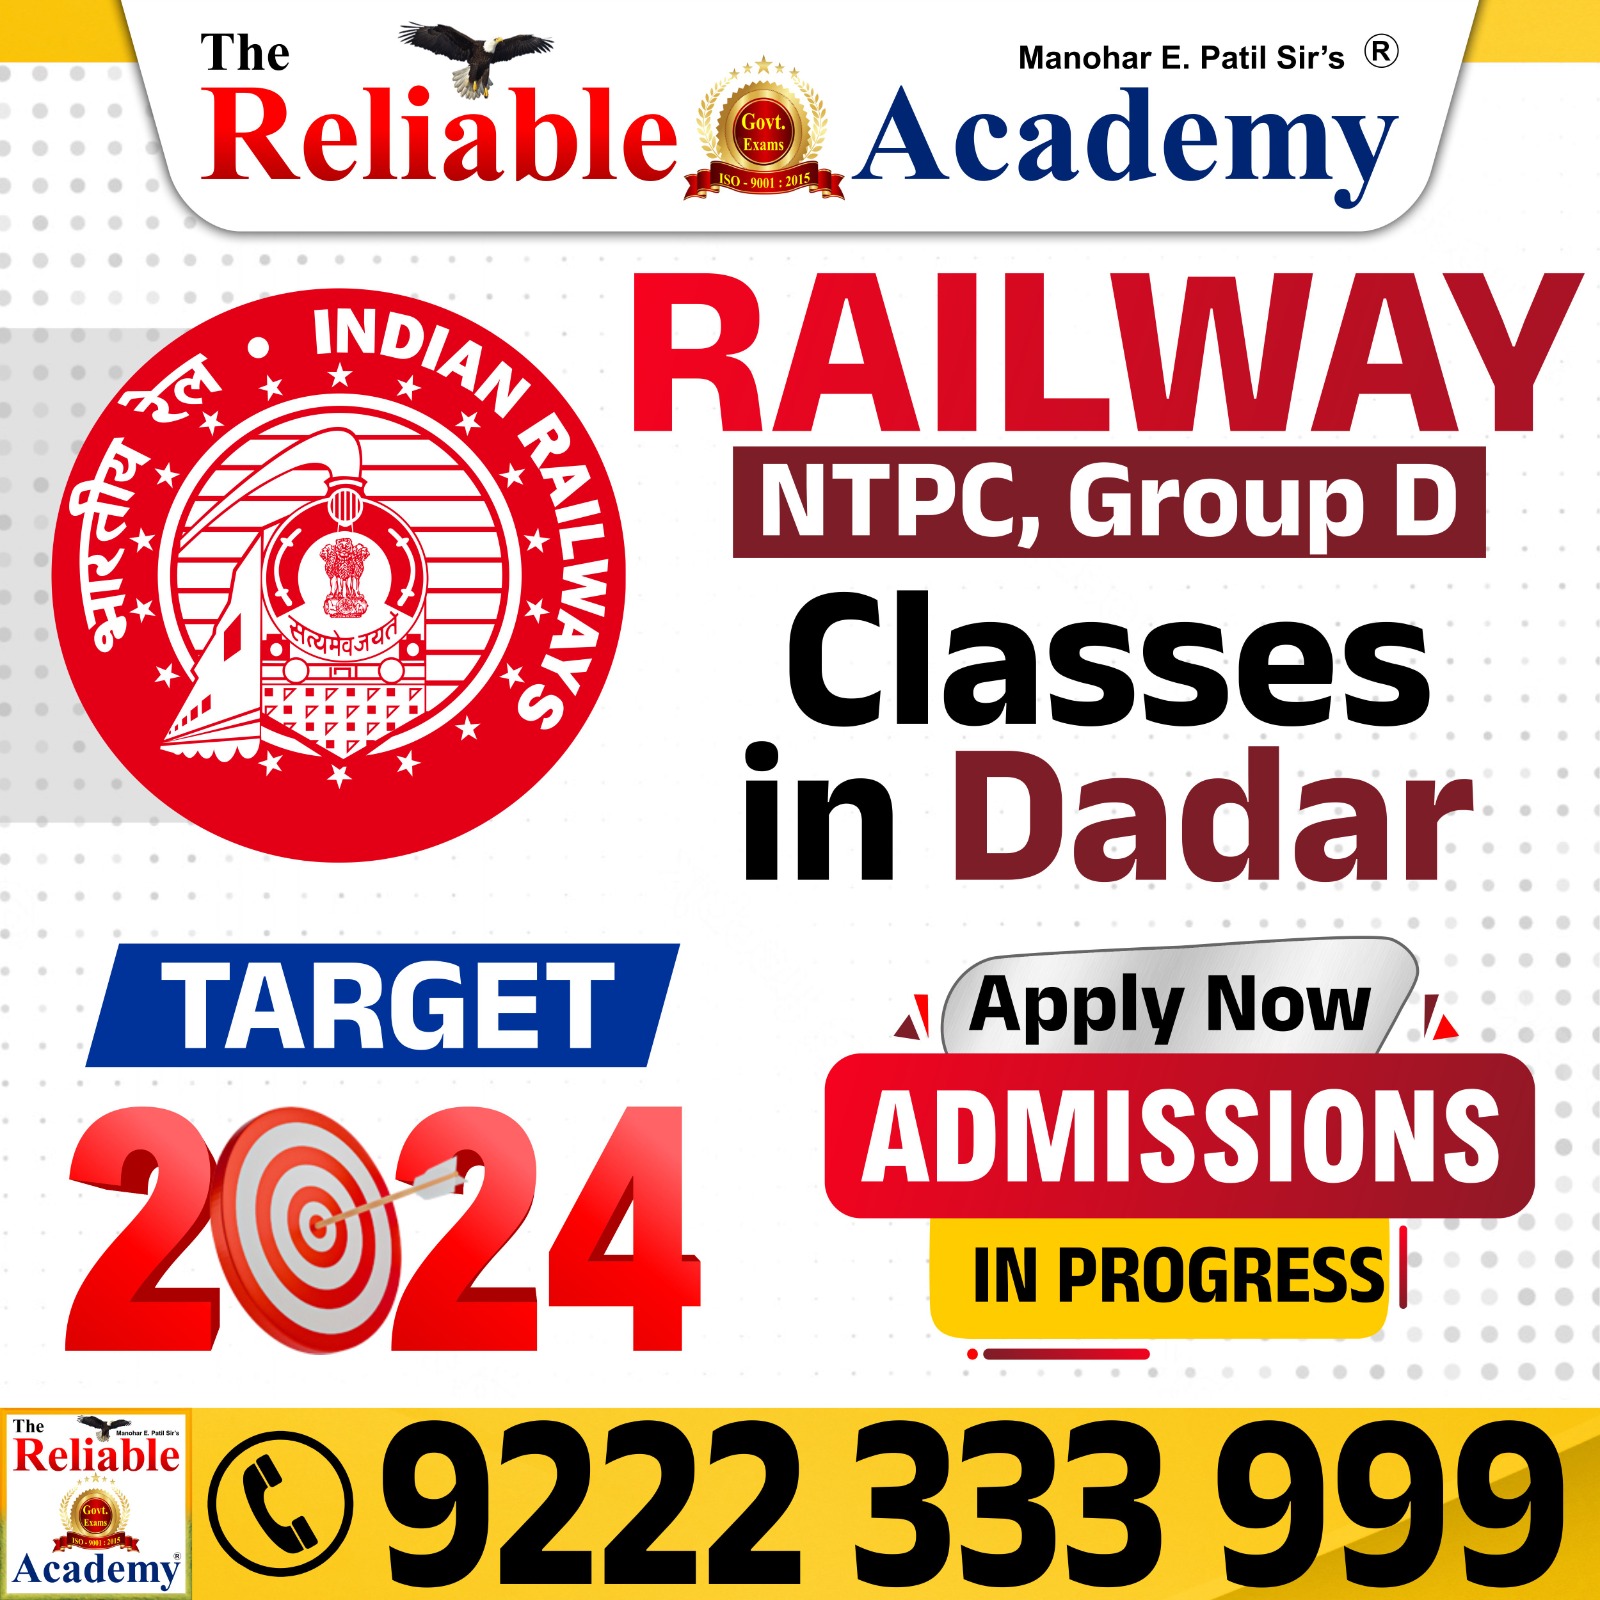 Railway Classes in Dadar